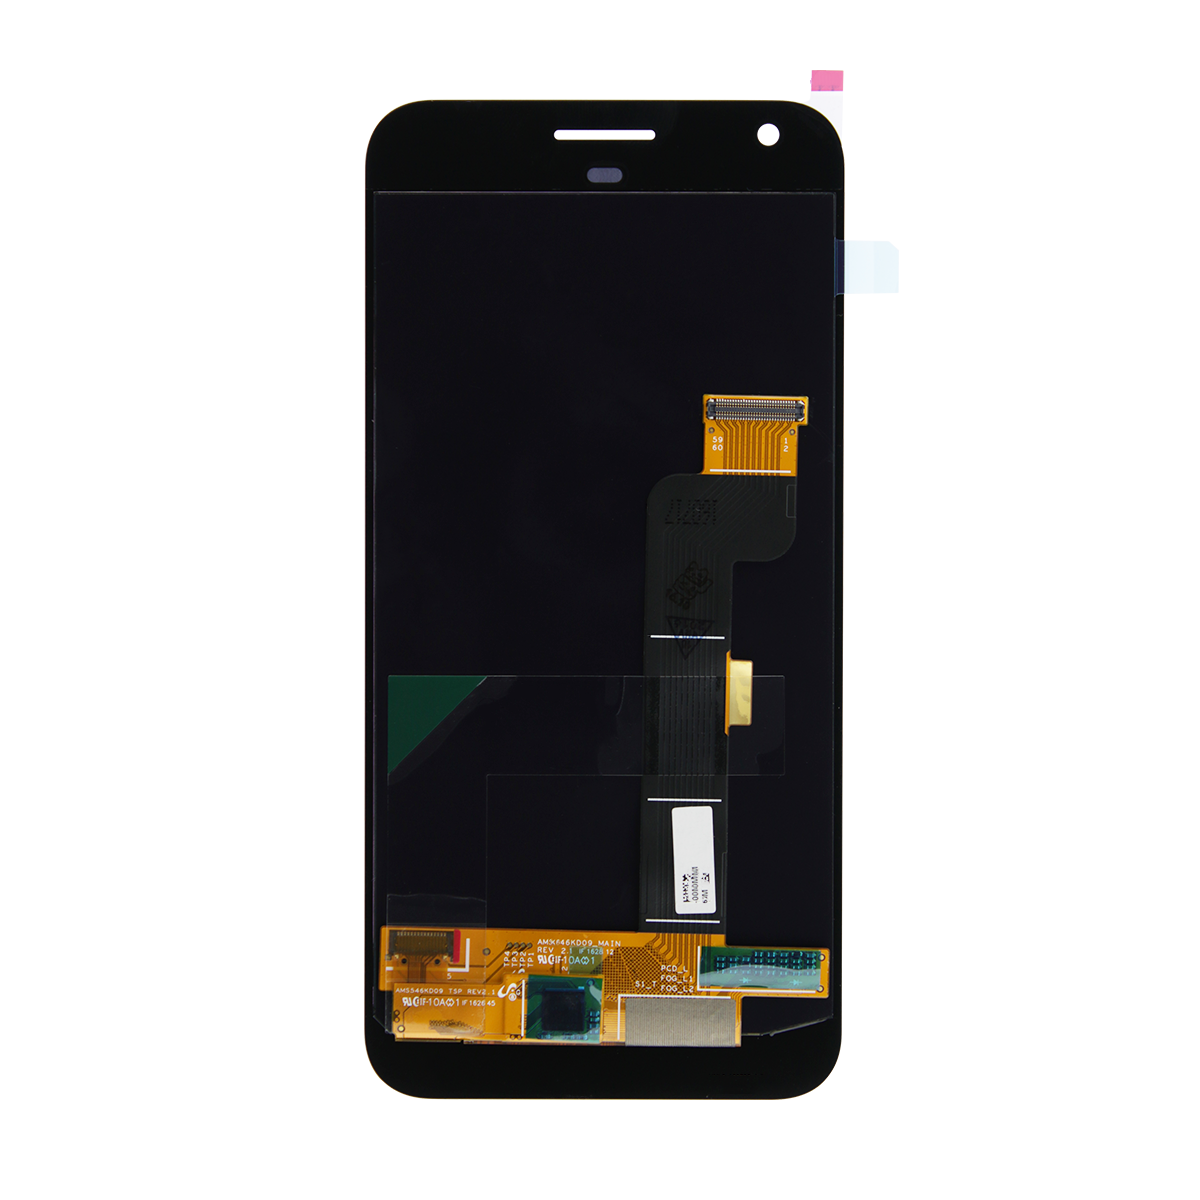 Google Pixel XL LCD Screen and Digitizer